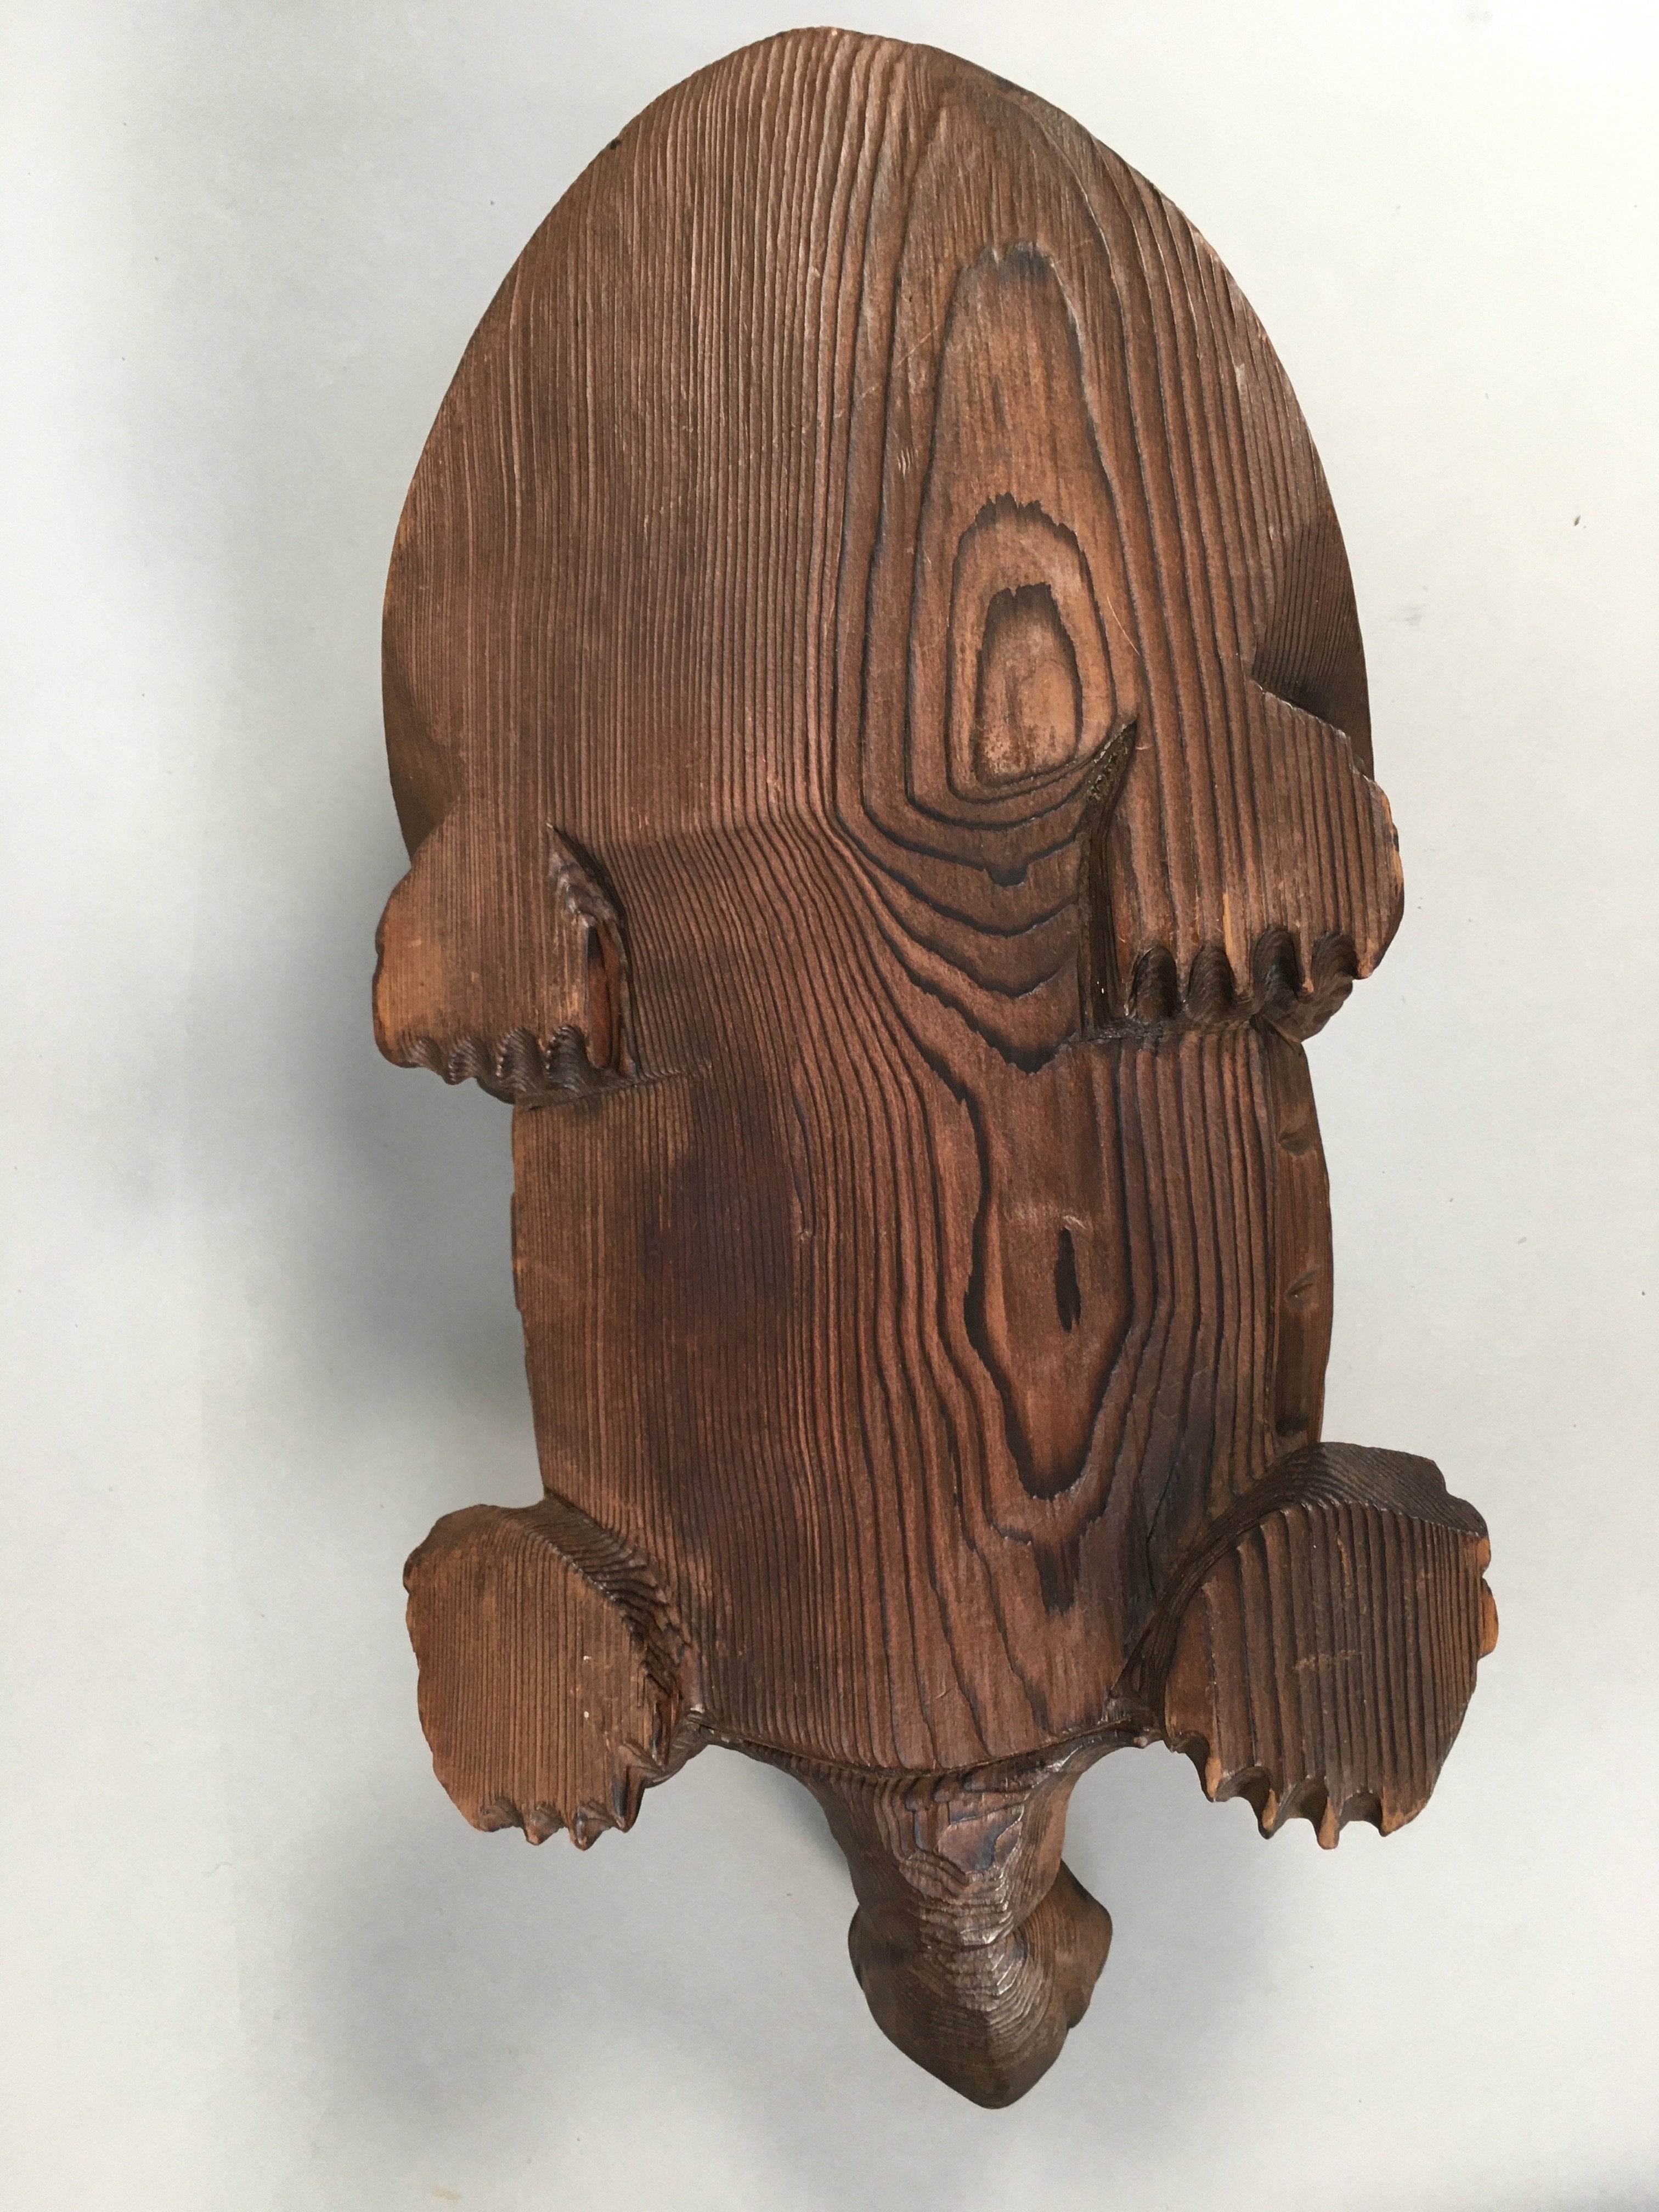 Kakuri wood carving kit pcs – Mystery Fun Club US